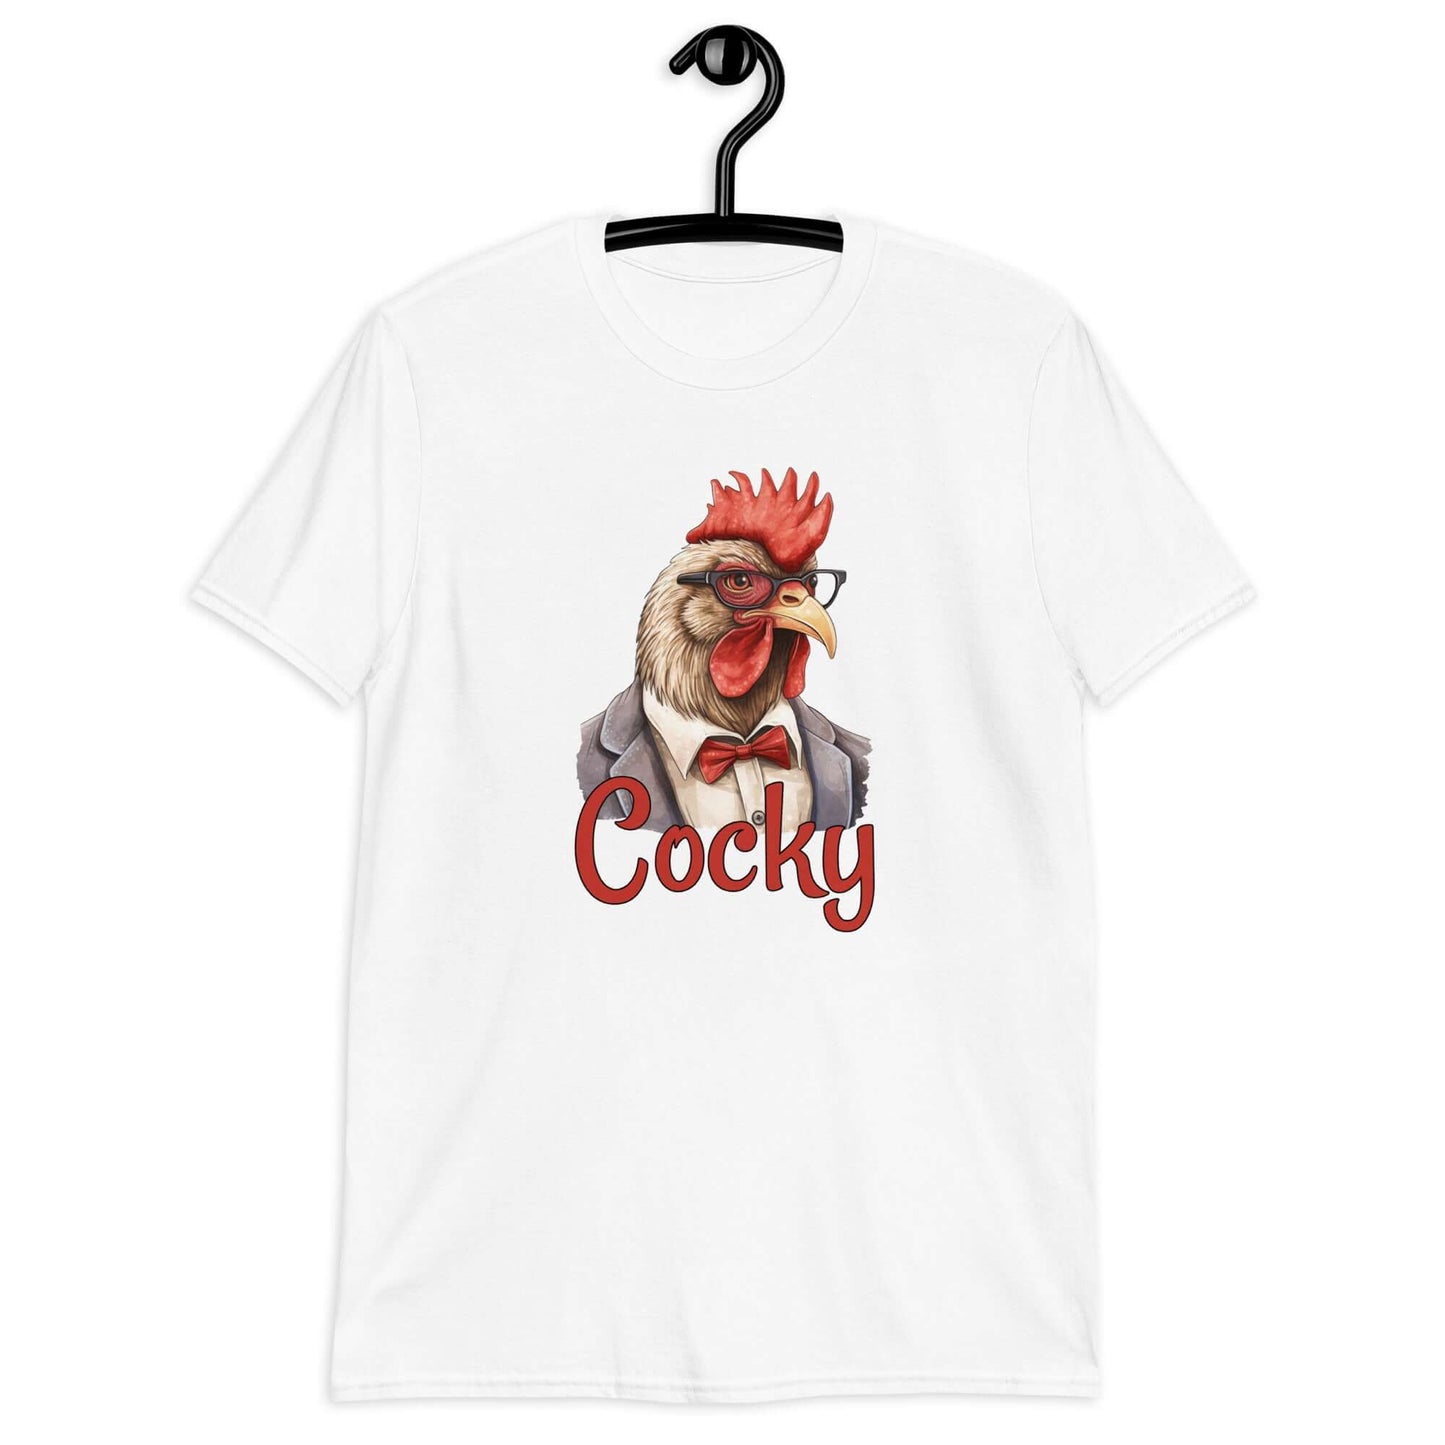 Arrogant rooster T-shirt